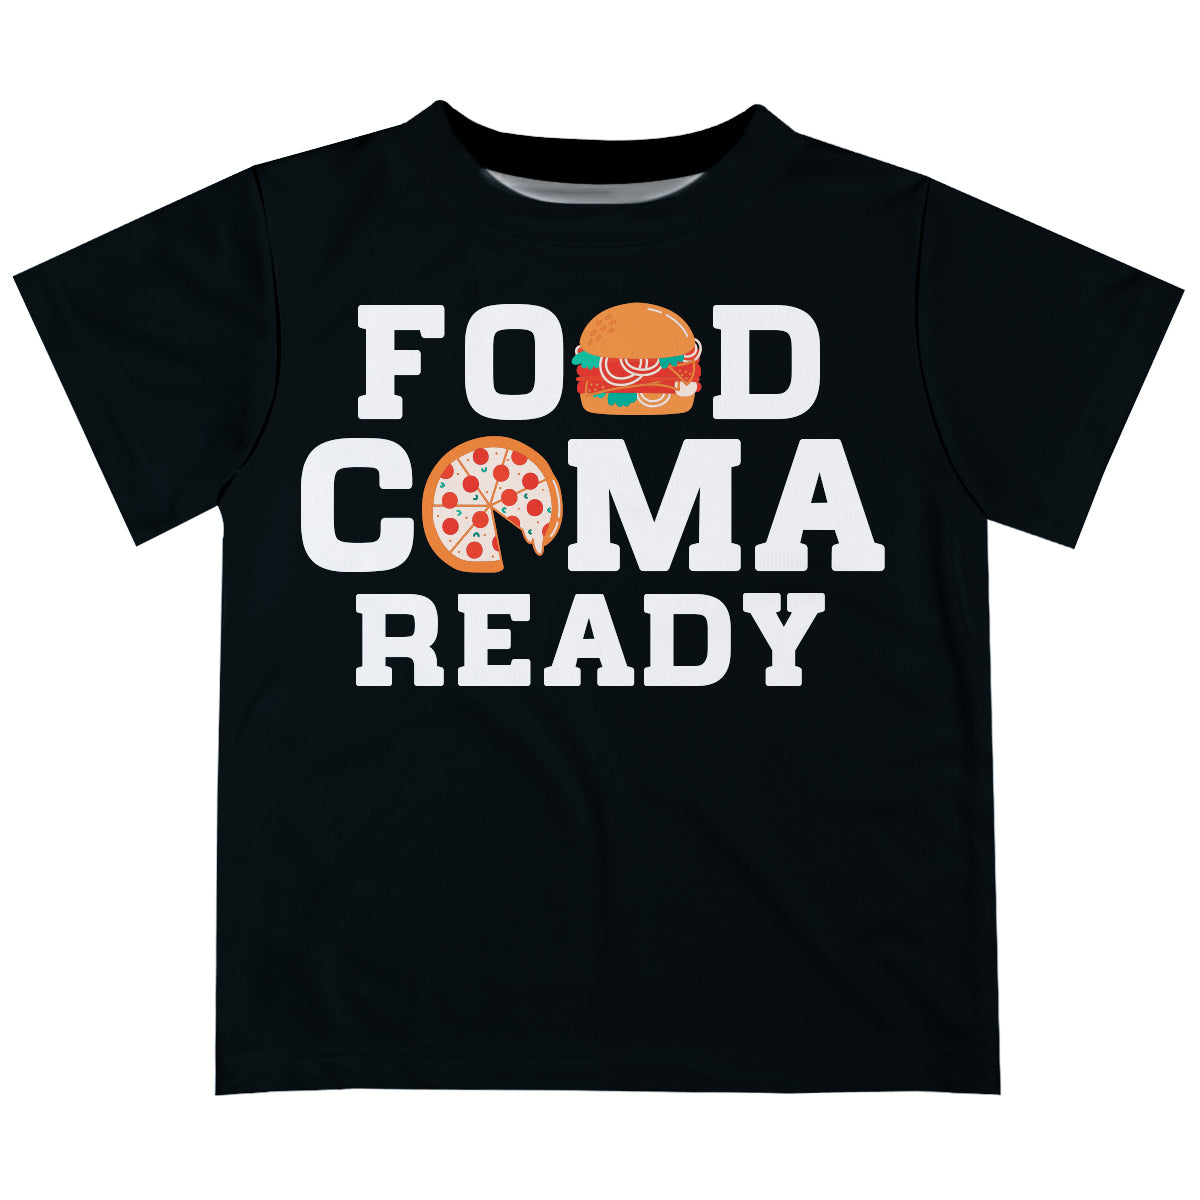 Food Coma Ready Black Short Sleeve Tee Shirt - Wimziy&Co.